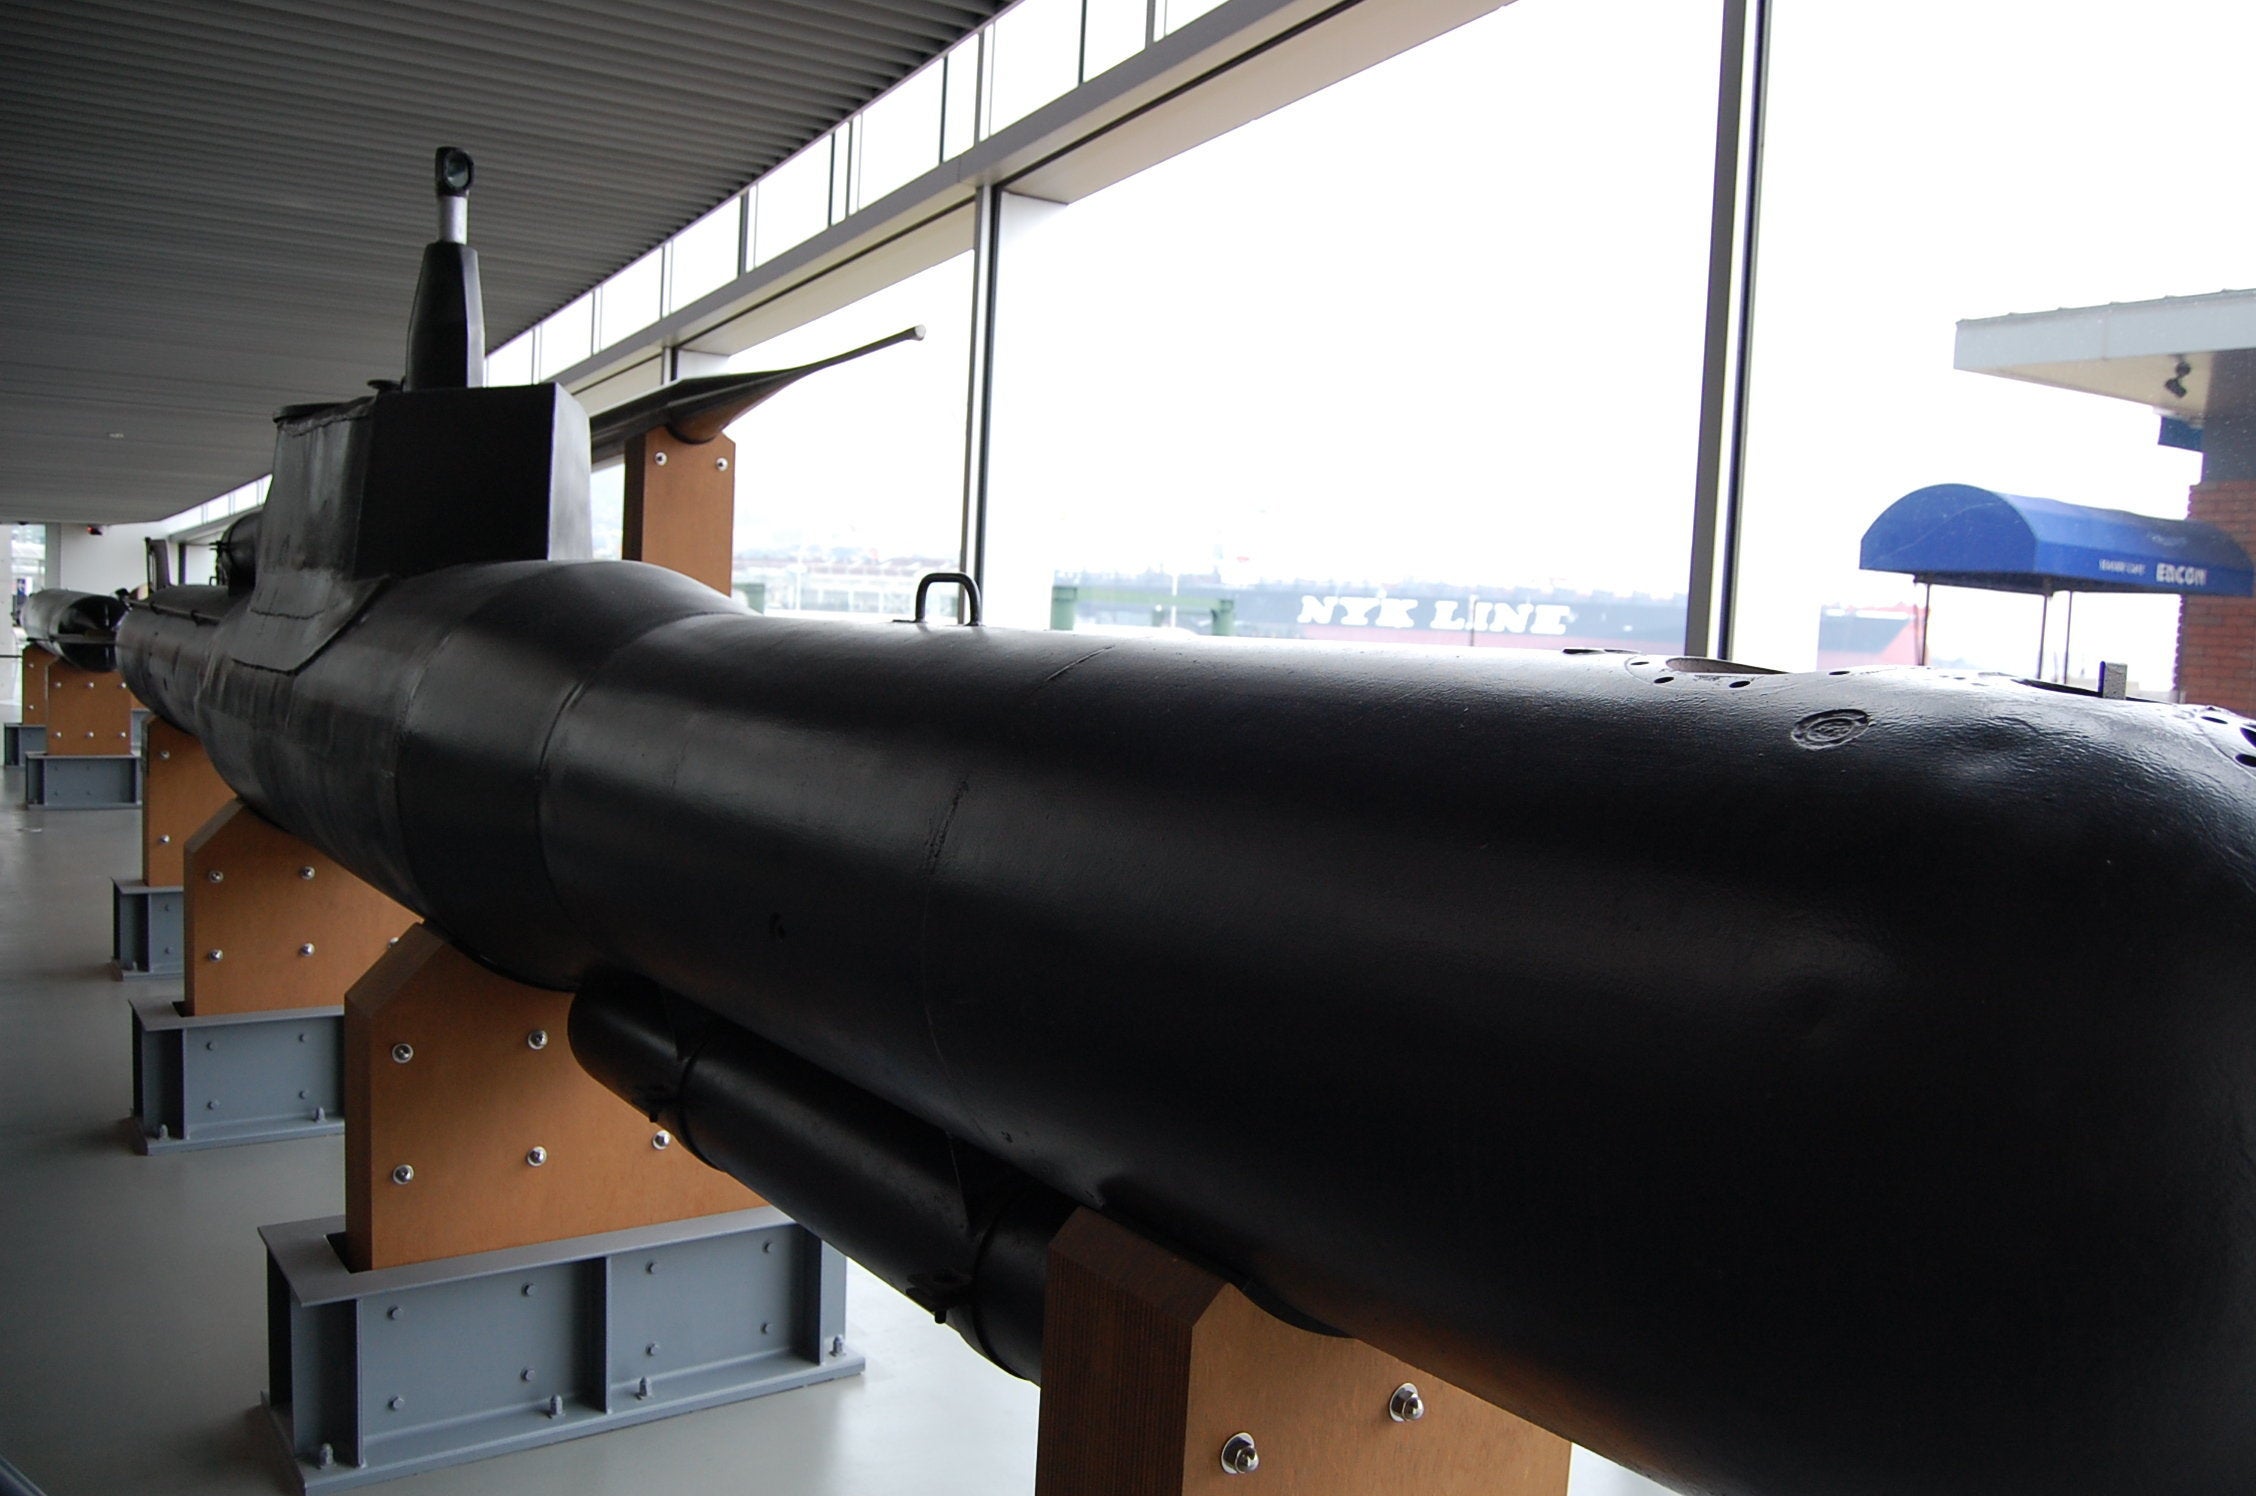 manned torpedoe